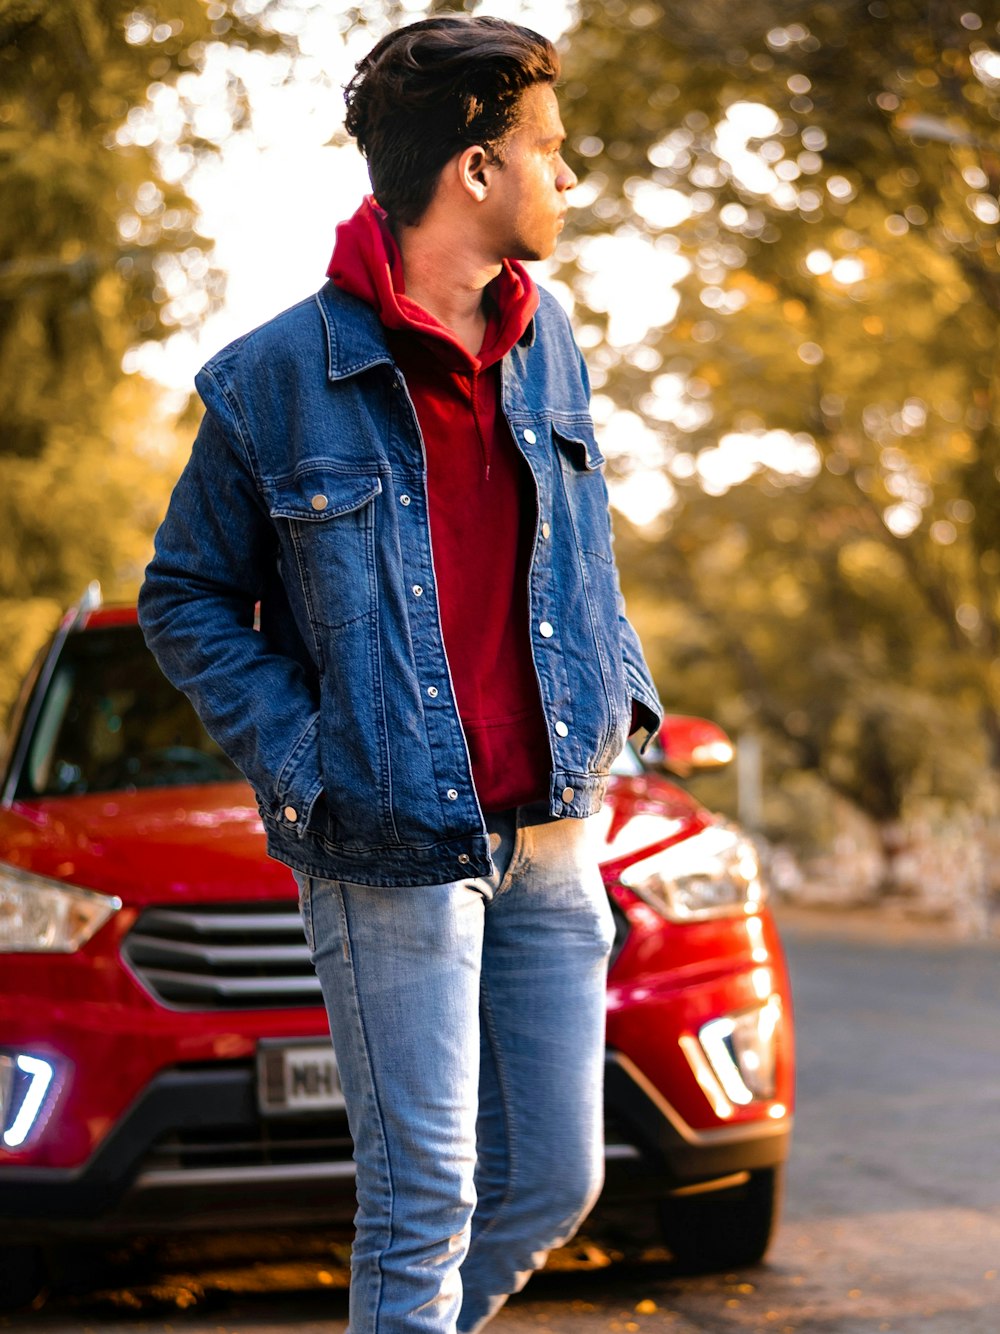 man wearing blue denim jacket standing near red vehicle beside road during daytime